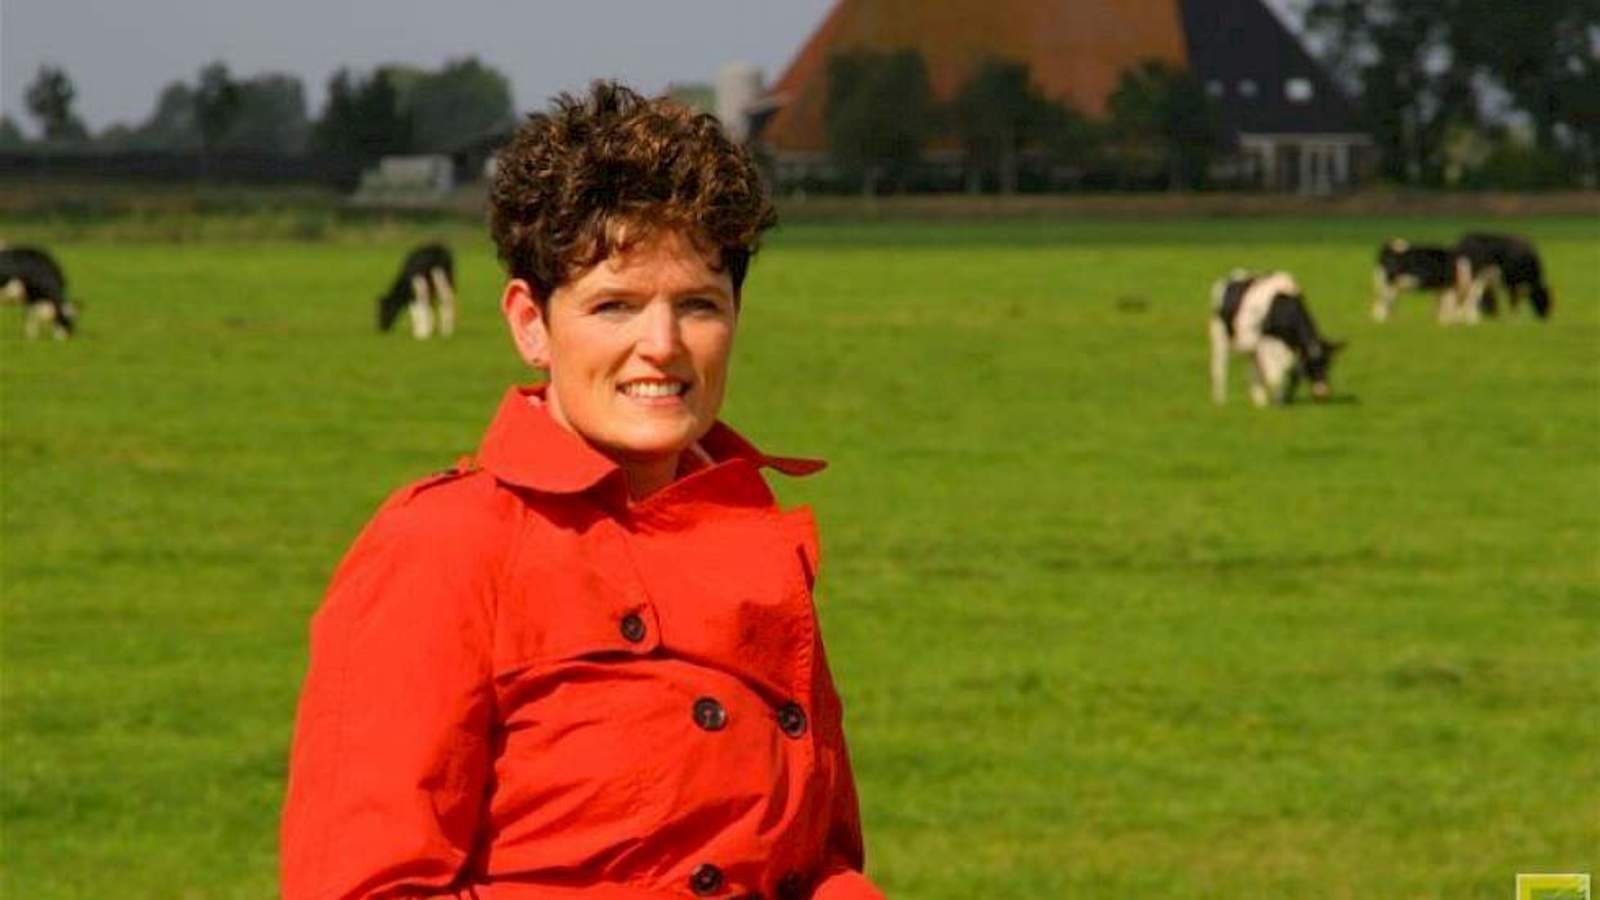 Sieta van Keimpema elected as the new president for European Milk Board